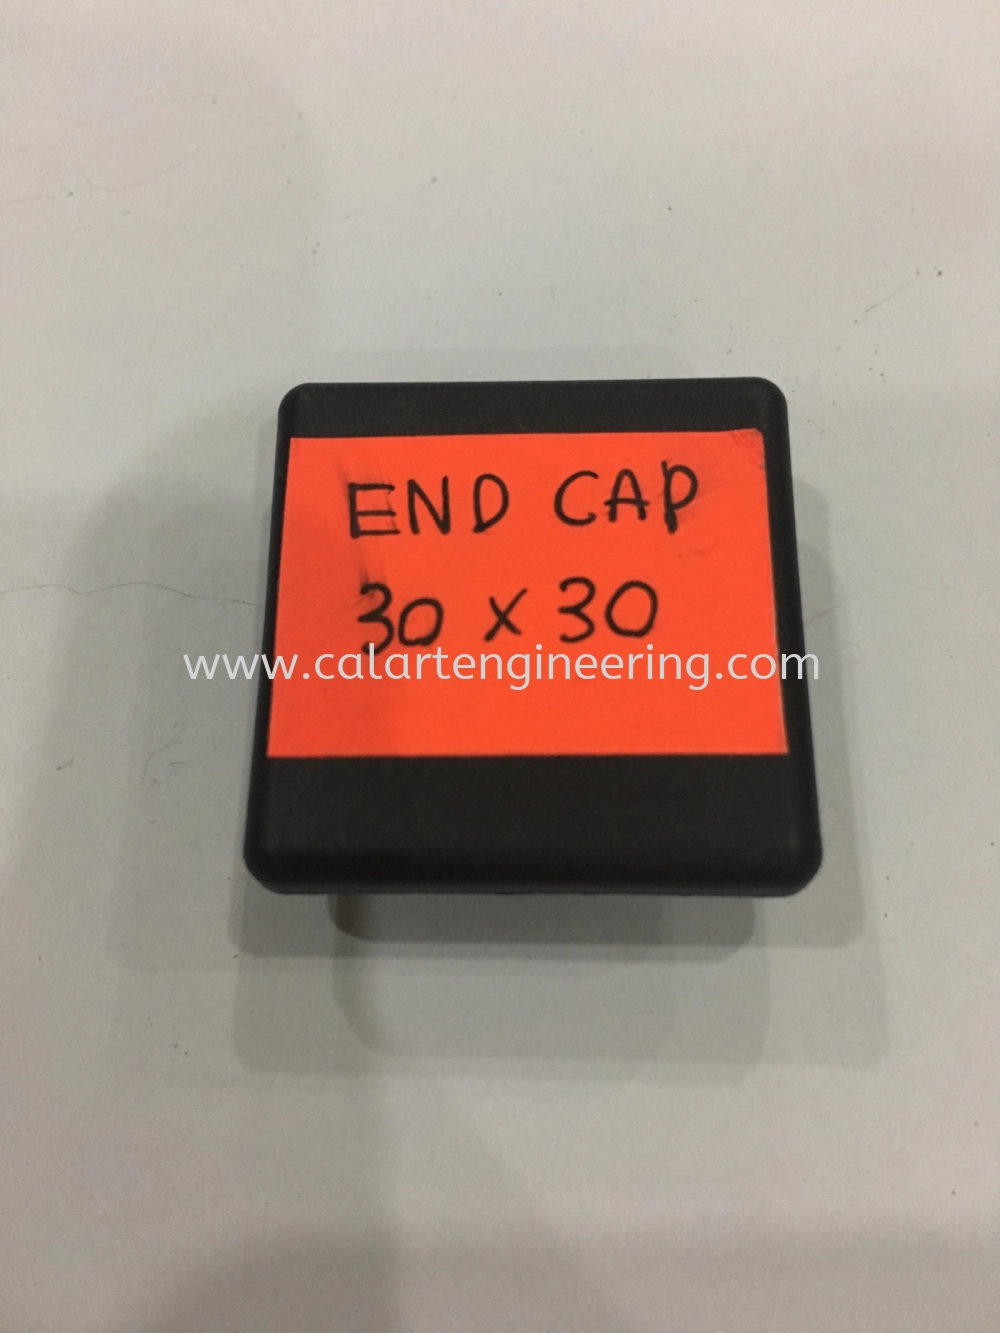 End Cap 30 X 30